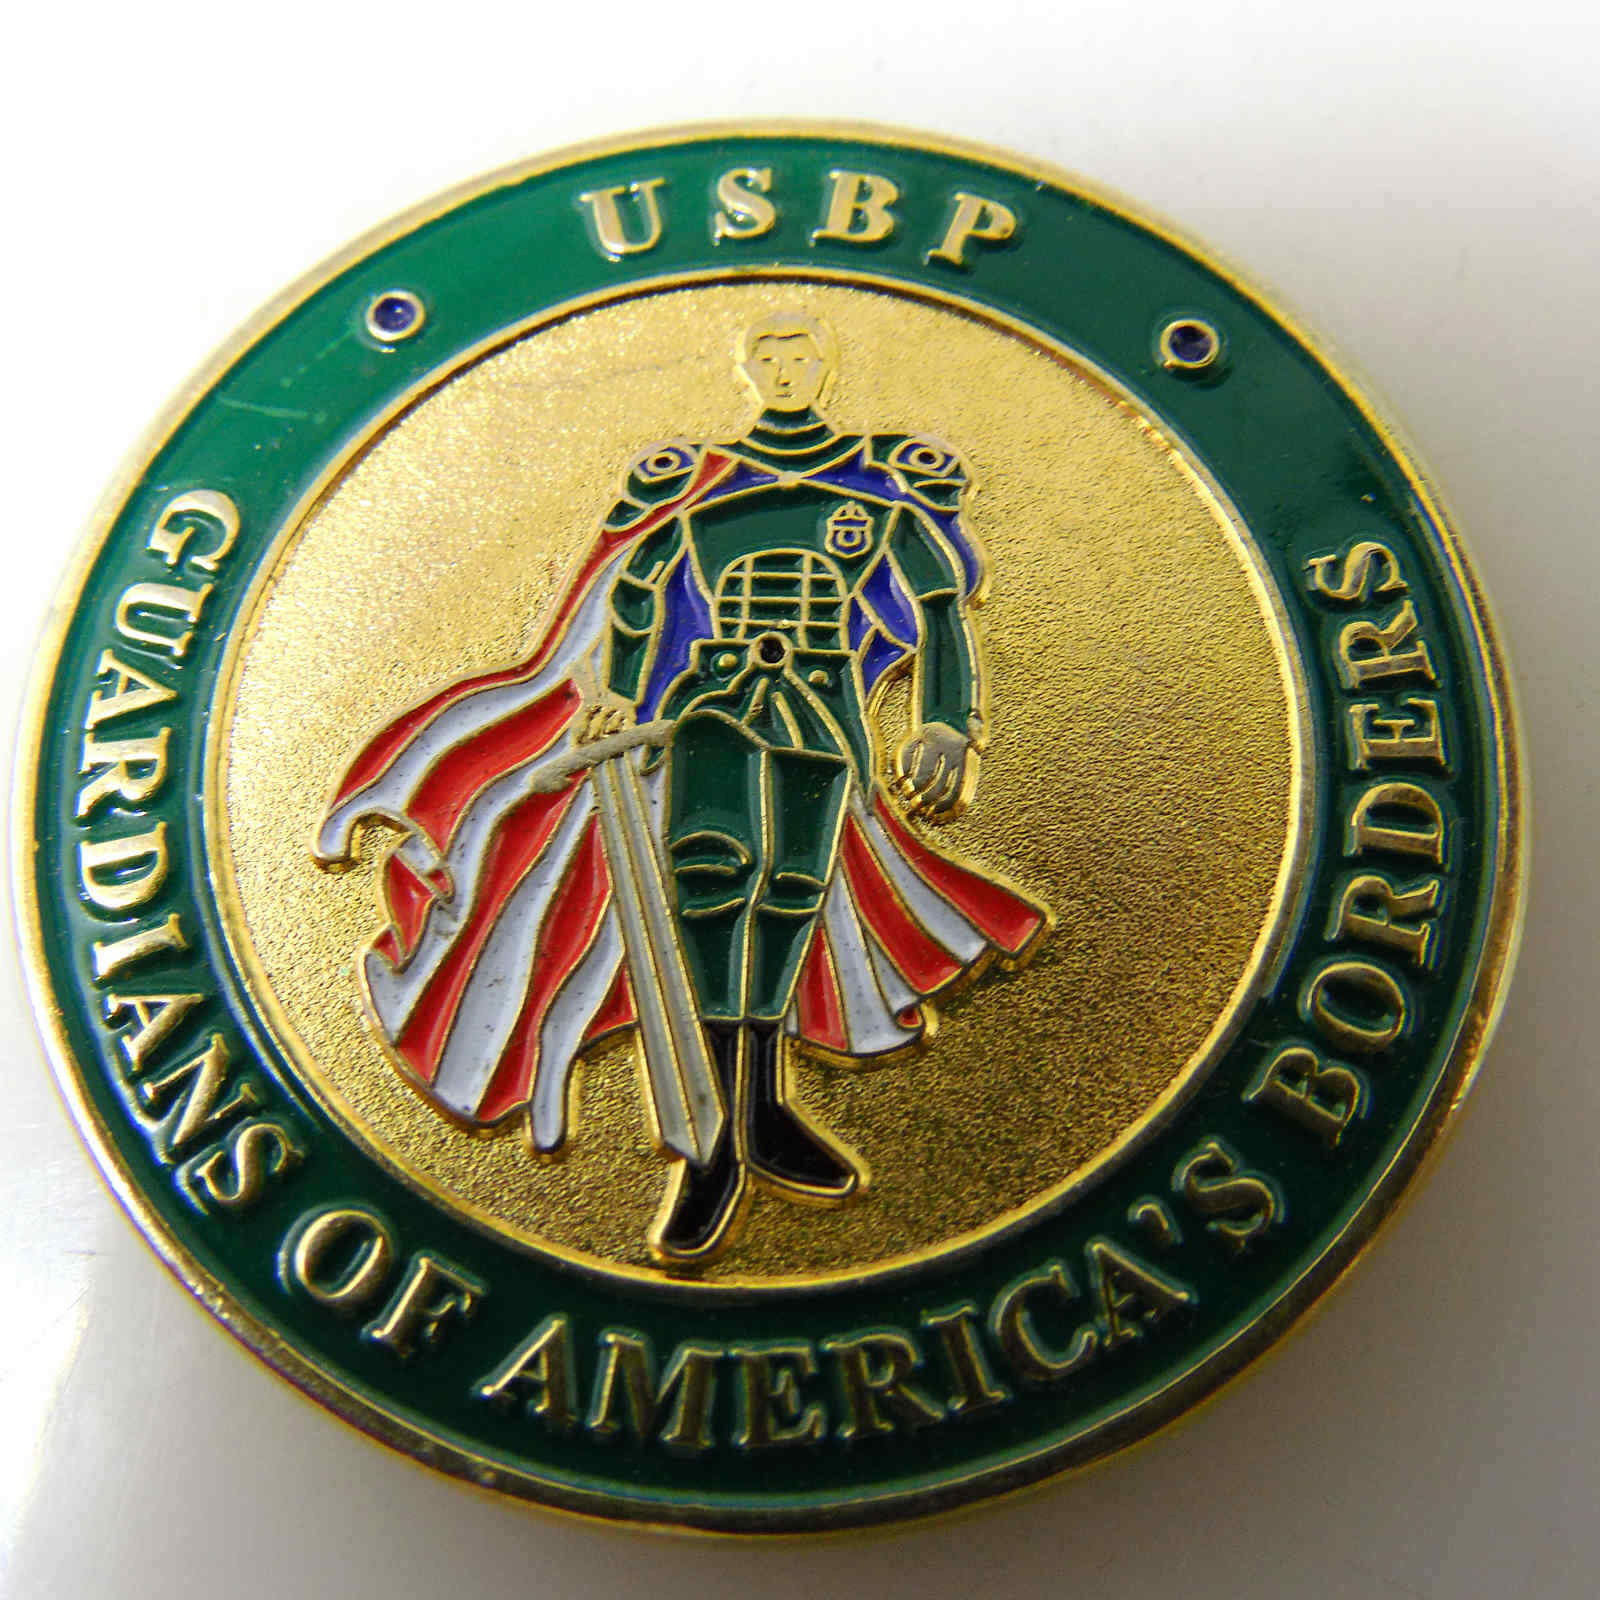 U.S. BORDER PATROL GUARDIANS OF AMERICA BORDERS USBP CHALLENGE COIN